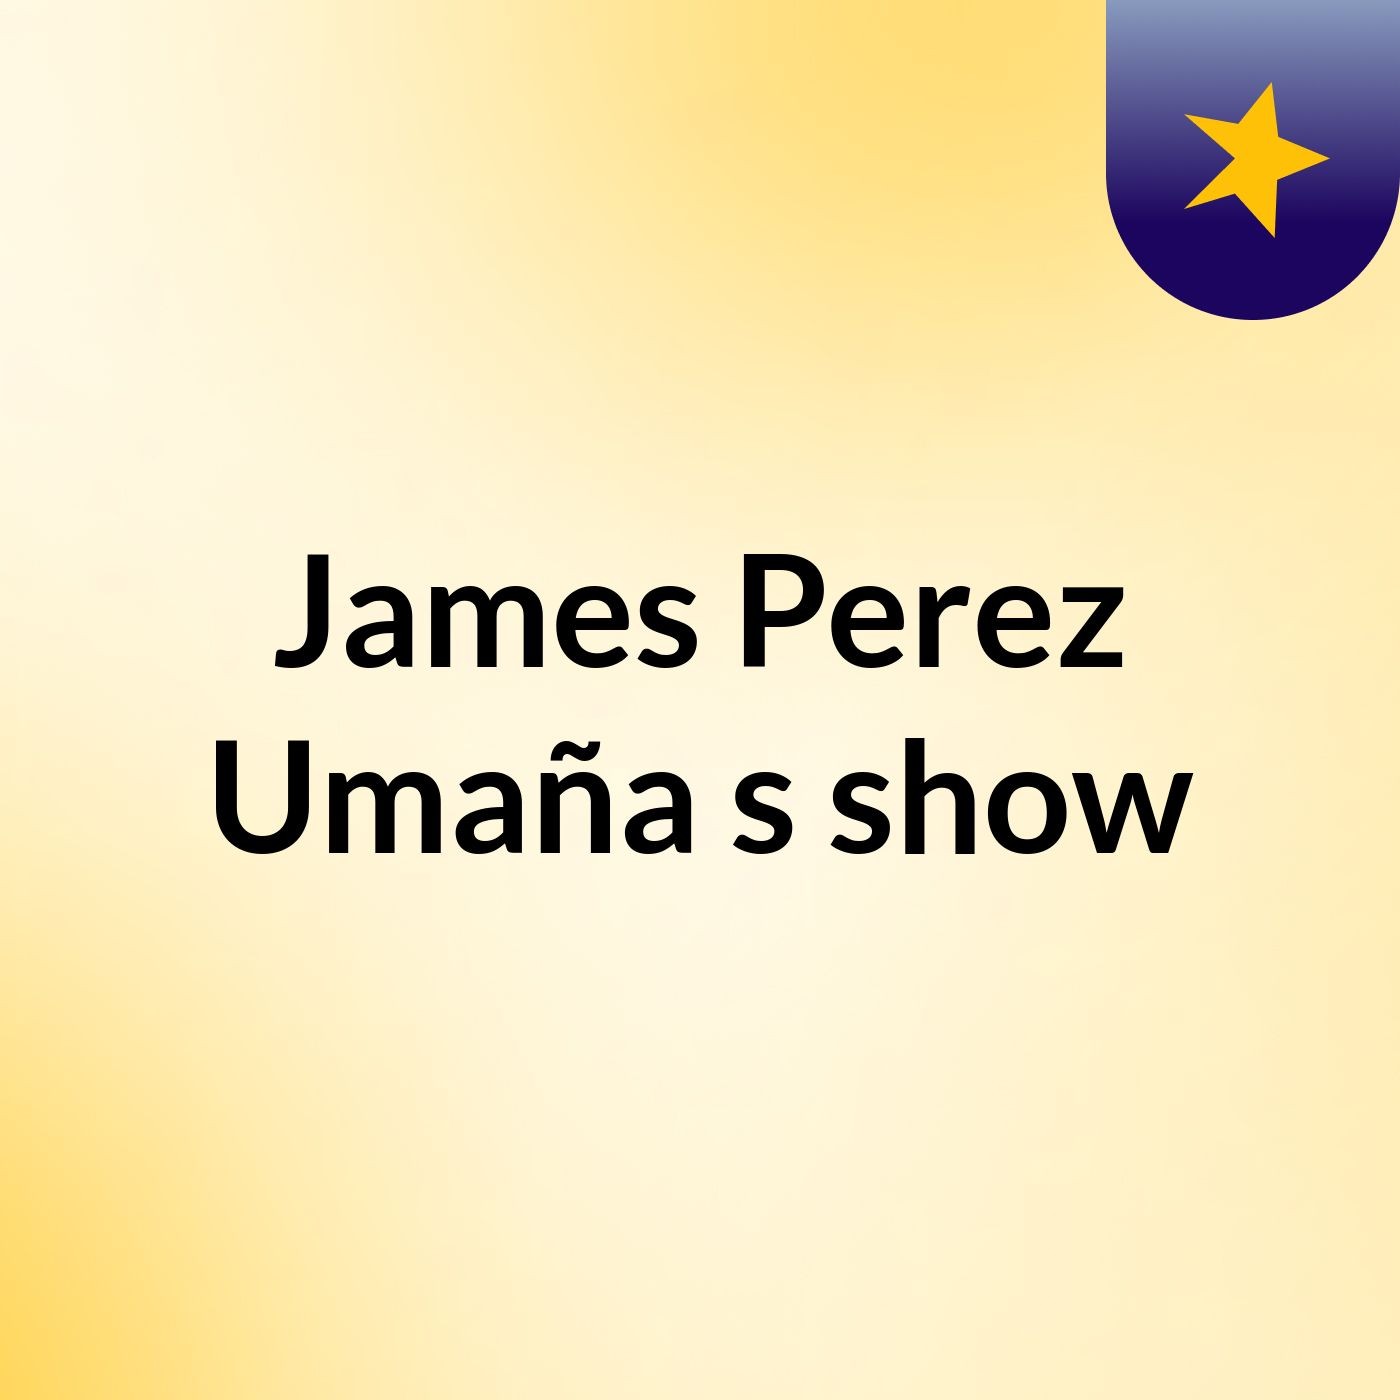 James Perez Umaña's show